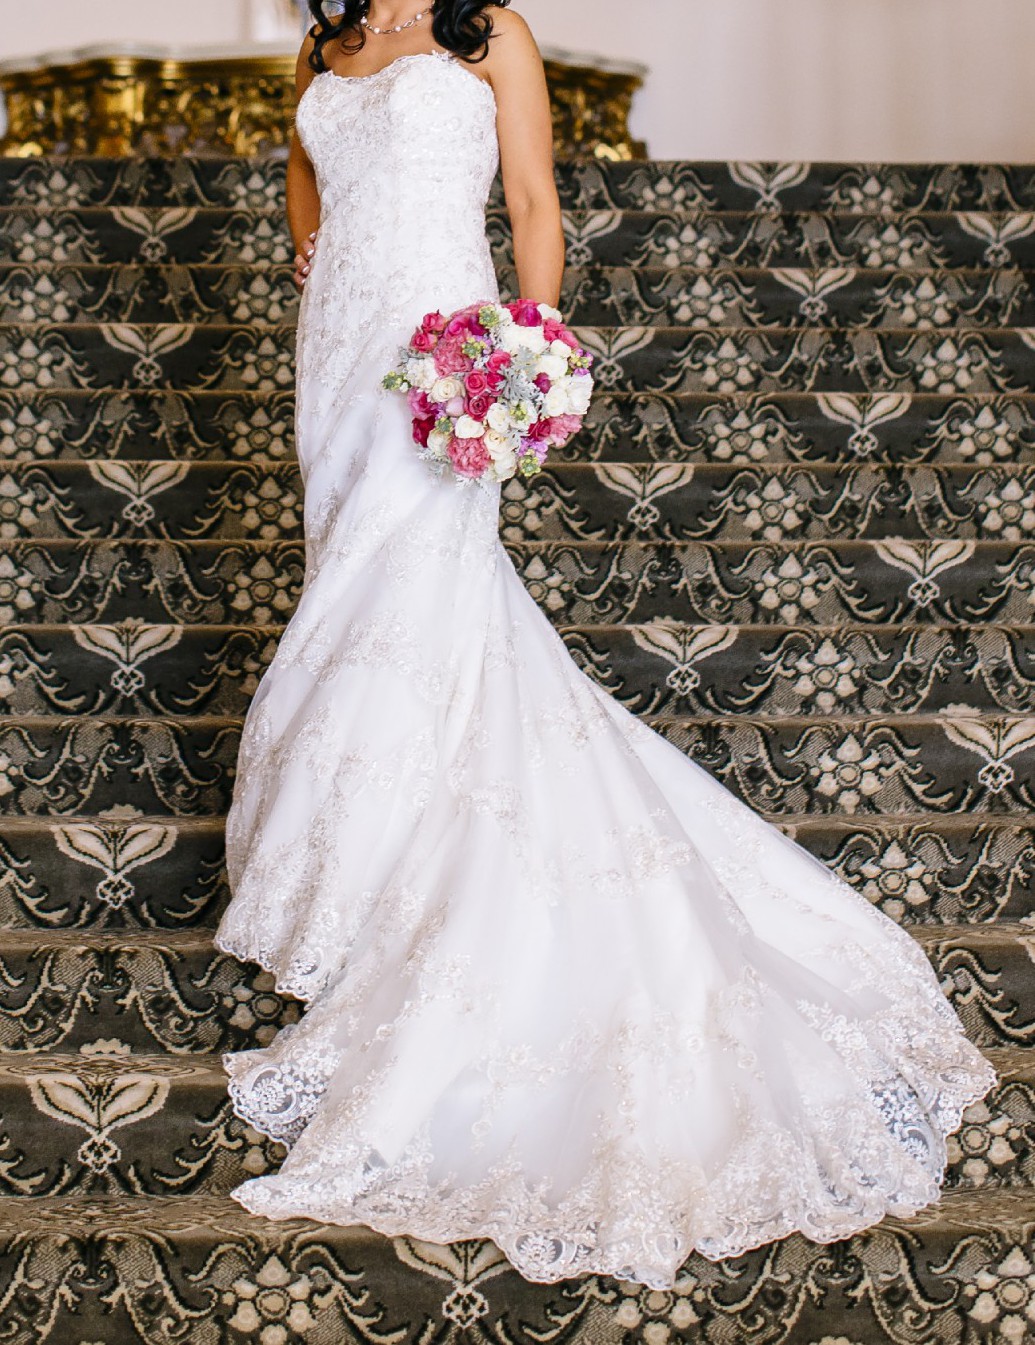  Allure  Bridals  Second Hand Wedding  Dress  on Sale 80 Off 